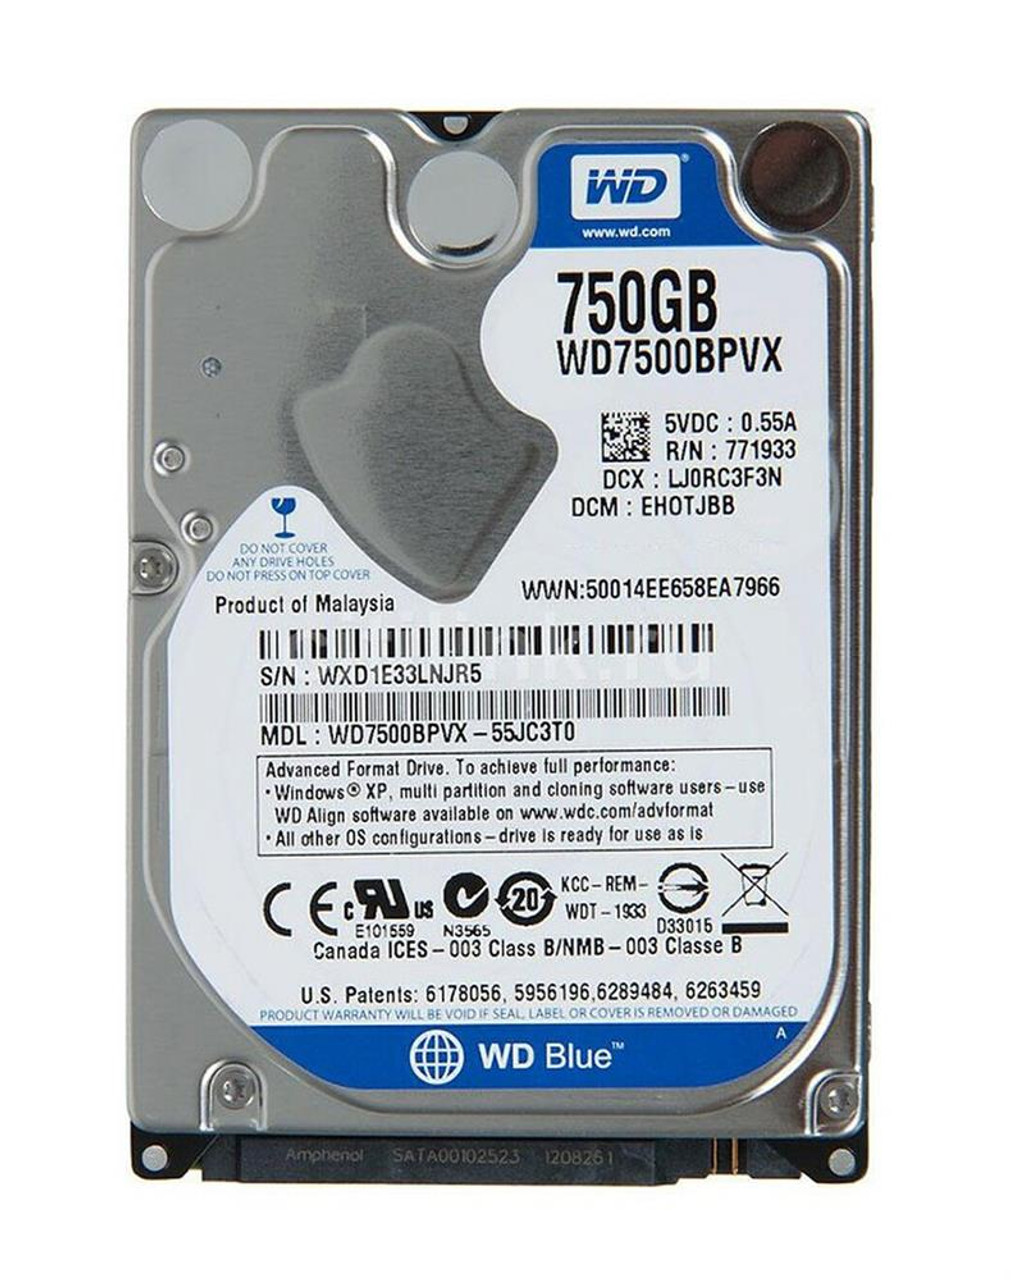 WD7500BPVX-55JC3T0 Western Digital Blue 750GB 5400RPM SATA 6Gbps 8MB Cache 2.5-inch Internal Hard Drive